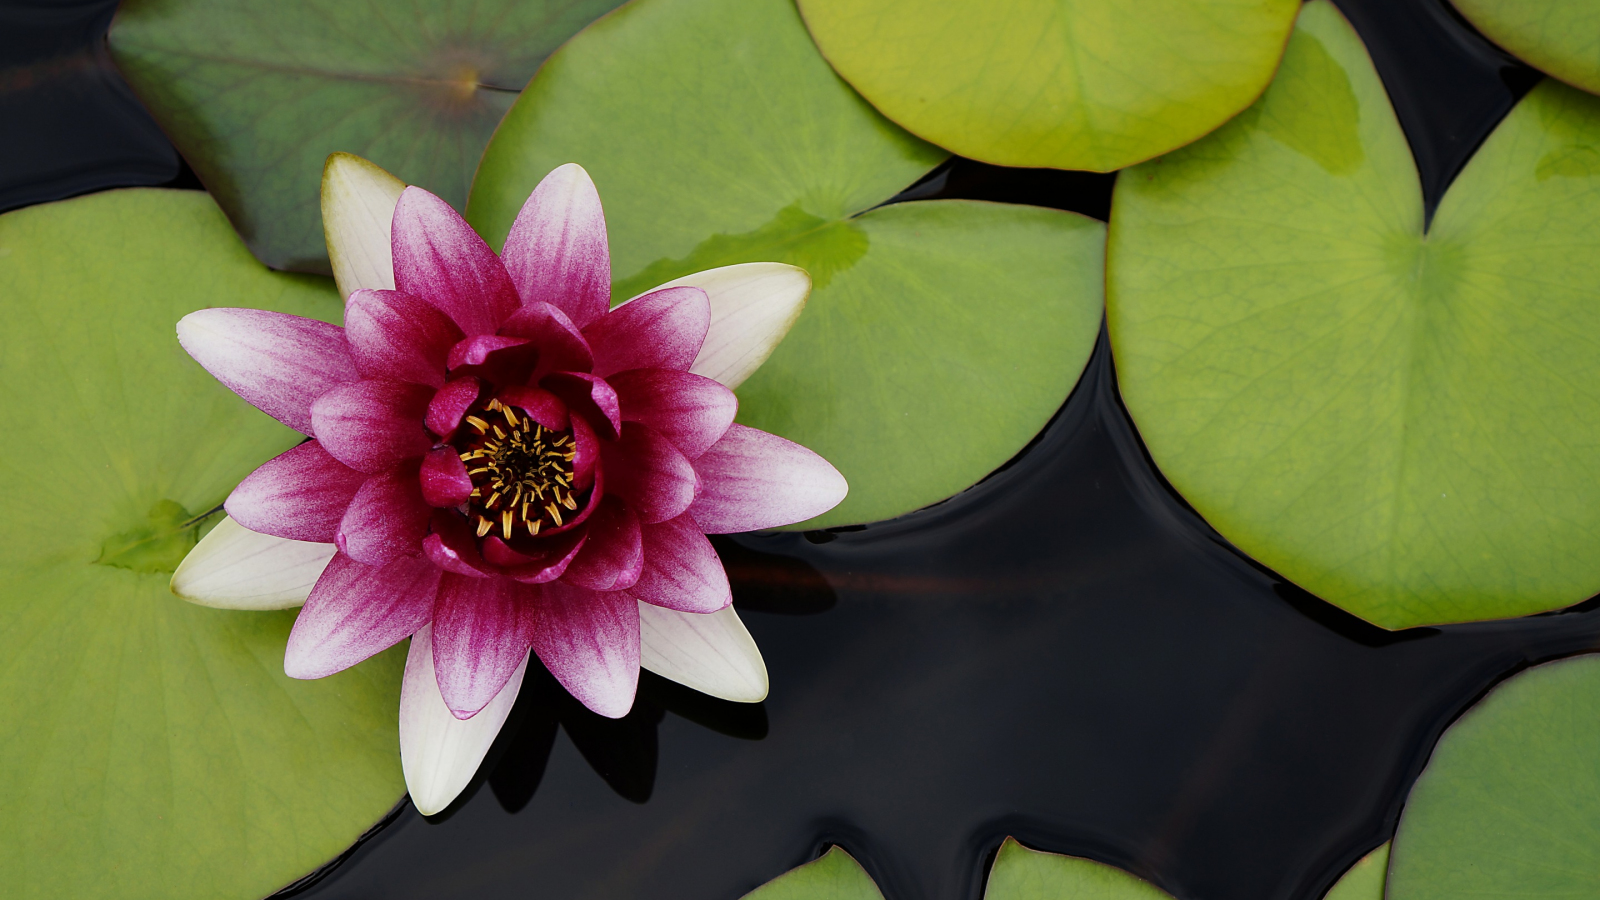 Download 1600x900 Wallpaper Beautiful Water Lotus Flower, Widescreen 16:9,  Widescreen, 1600x900 Hd Image, Background, 5453